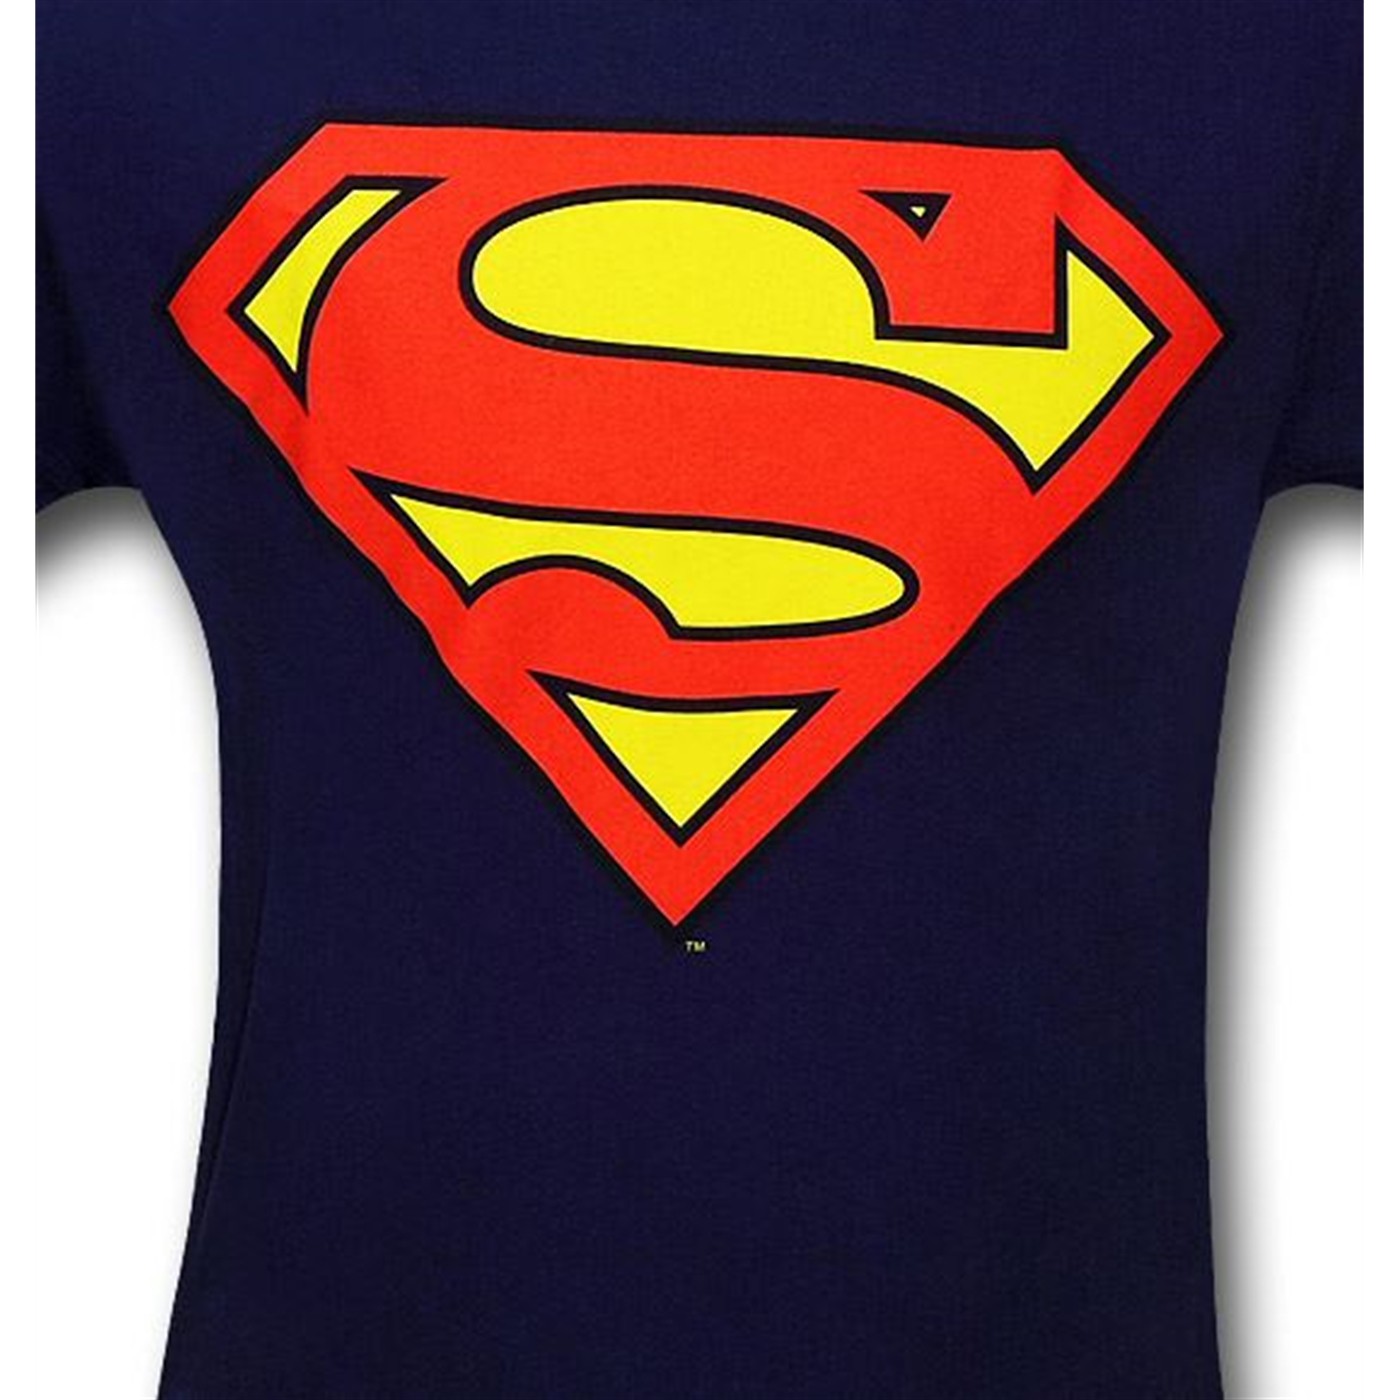 The Superman Symbol T-Shirt on Navy Blue